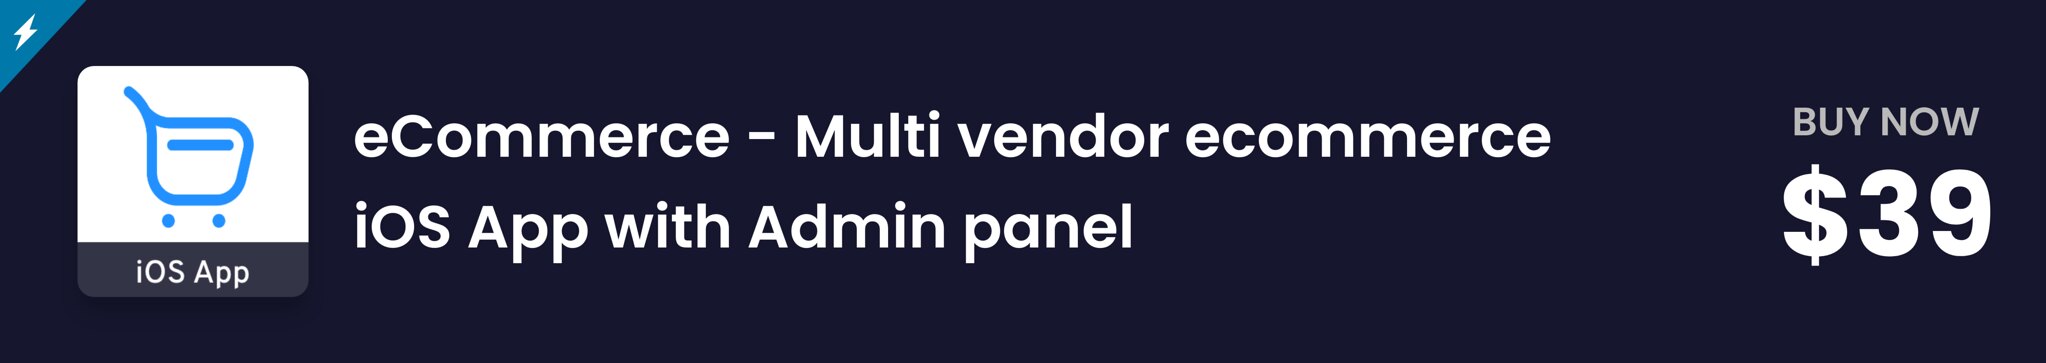 eCommerce - Multi vendor ecommerce Website with Admin panel - 2